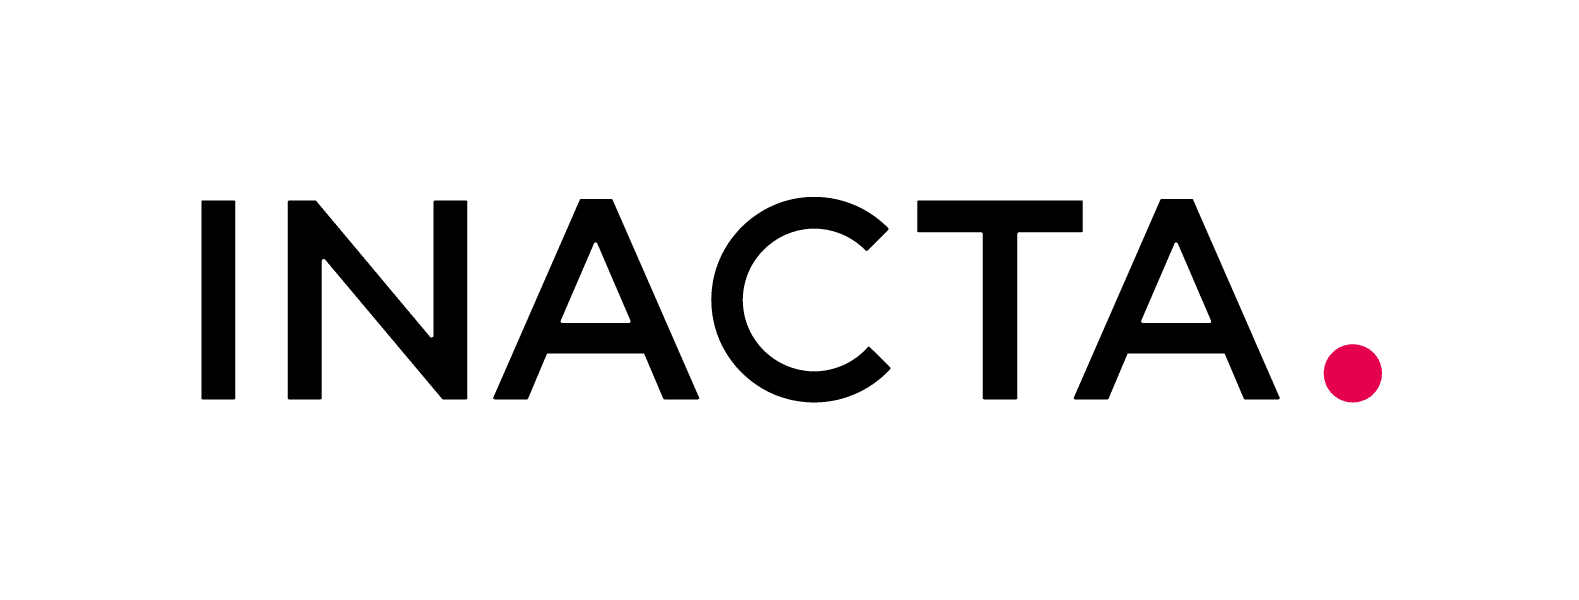 inacta logo Kommunikationstraining benefitIMPACT